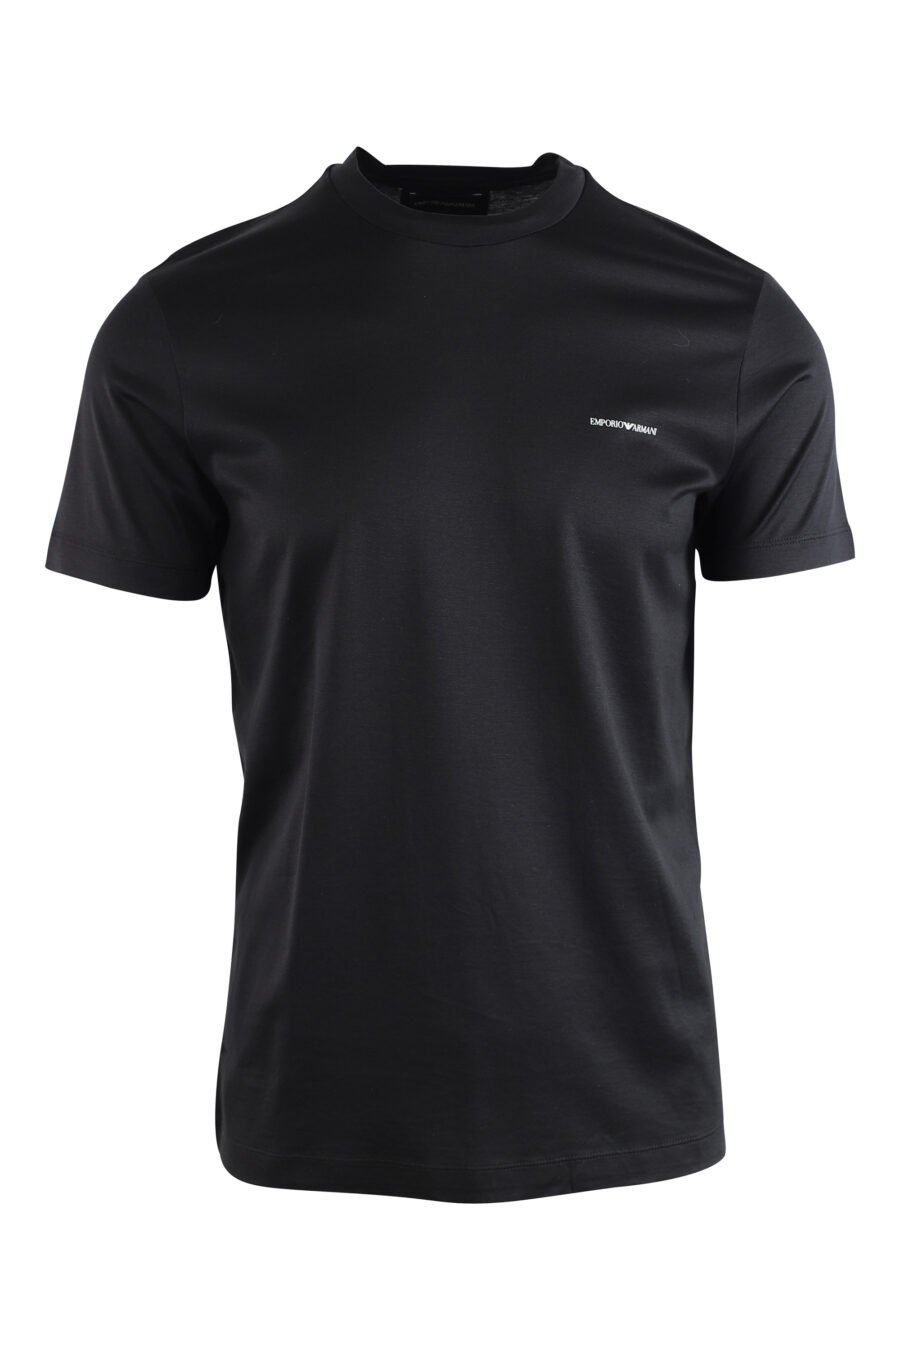 Camiseta negra con logo blanco pequeño - IMG 3741